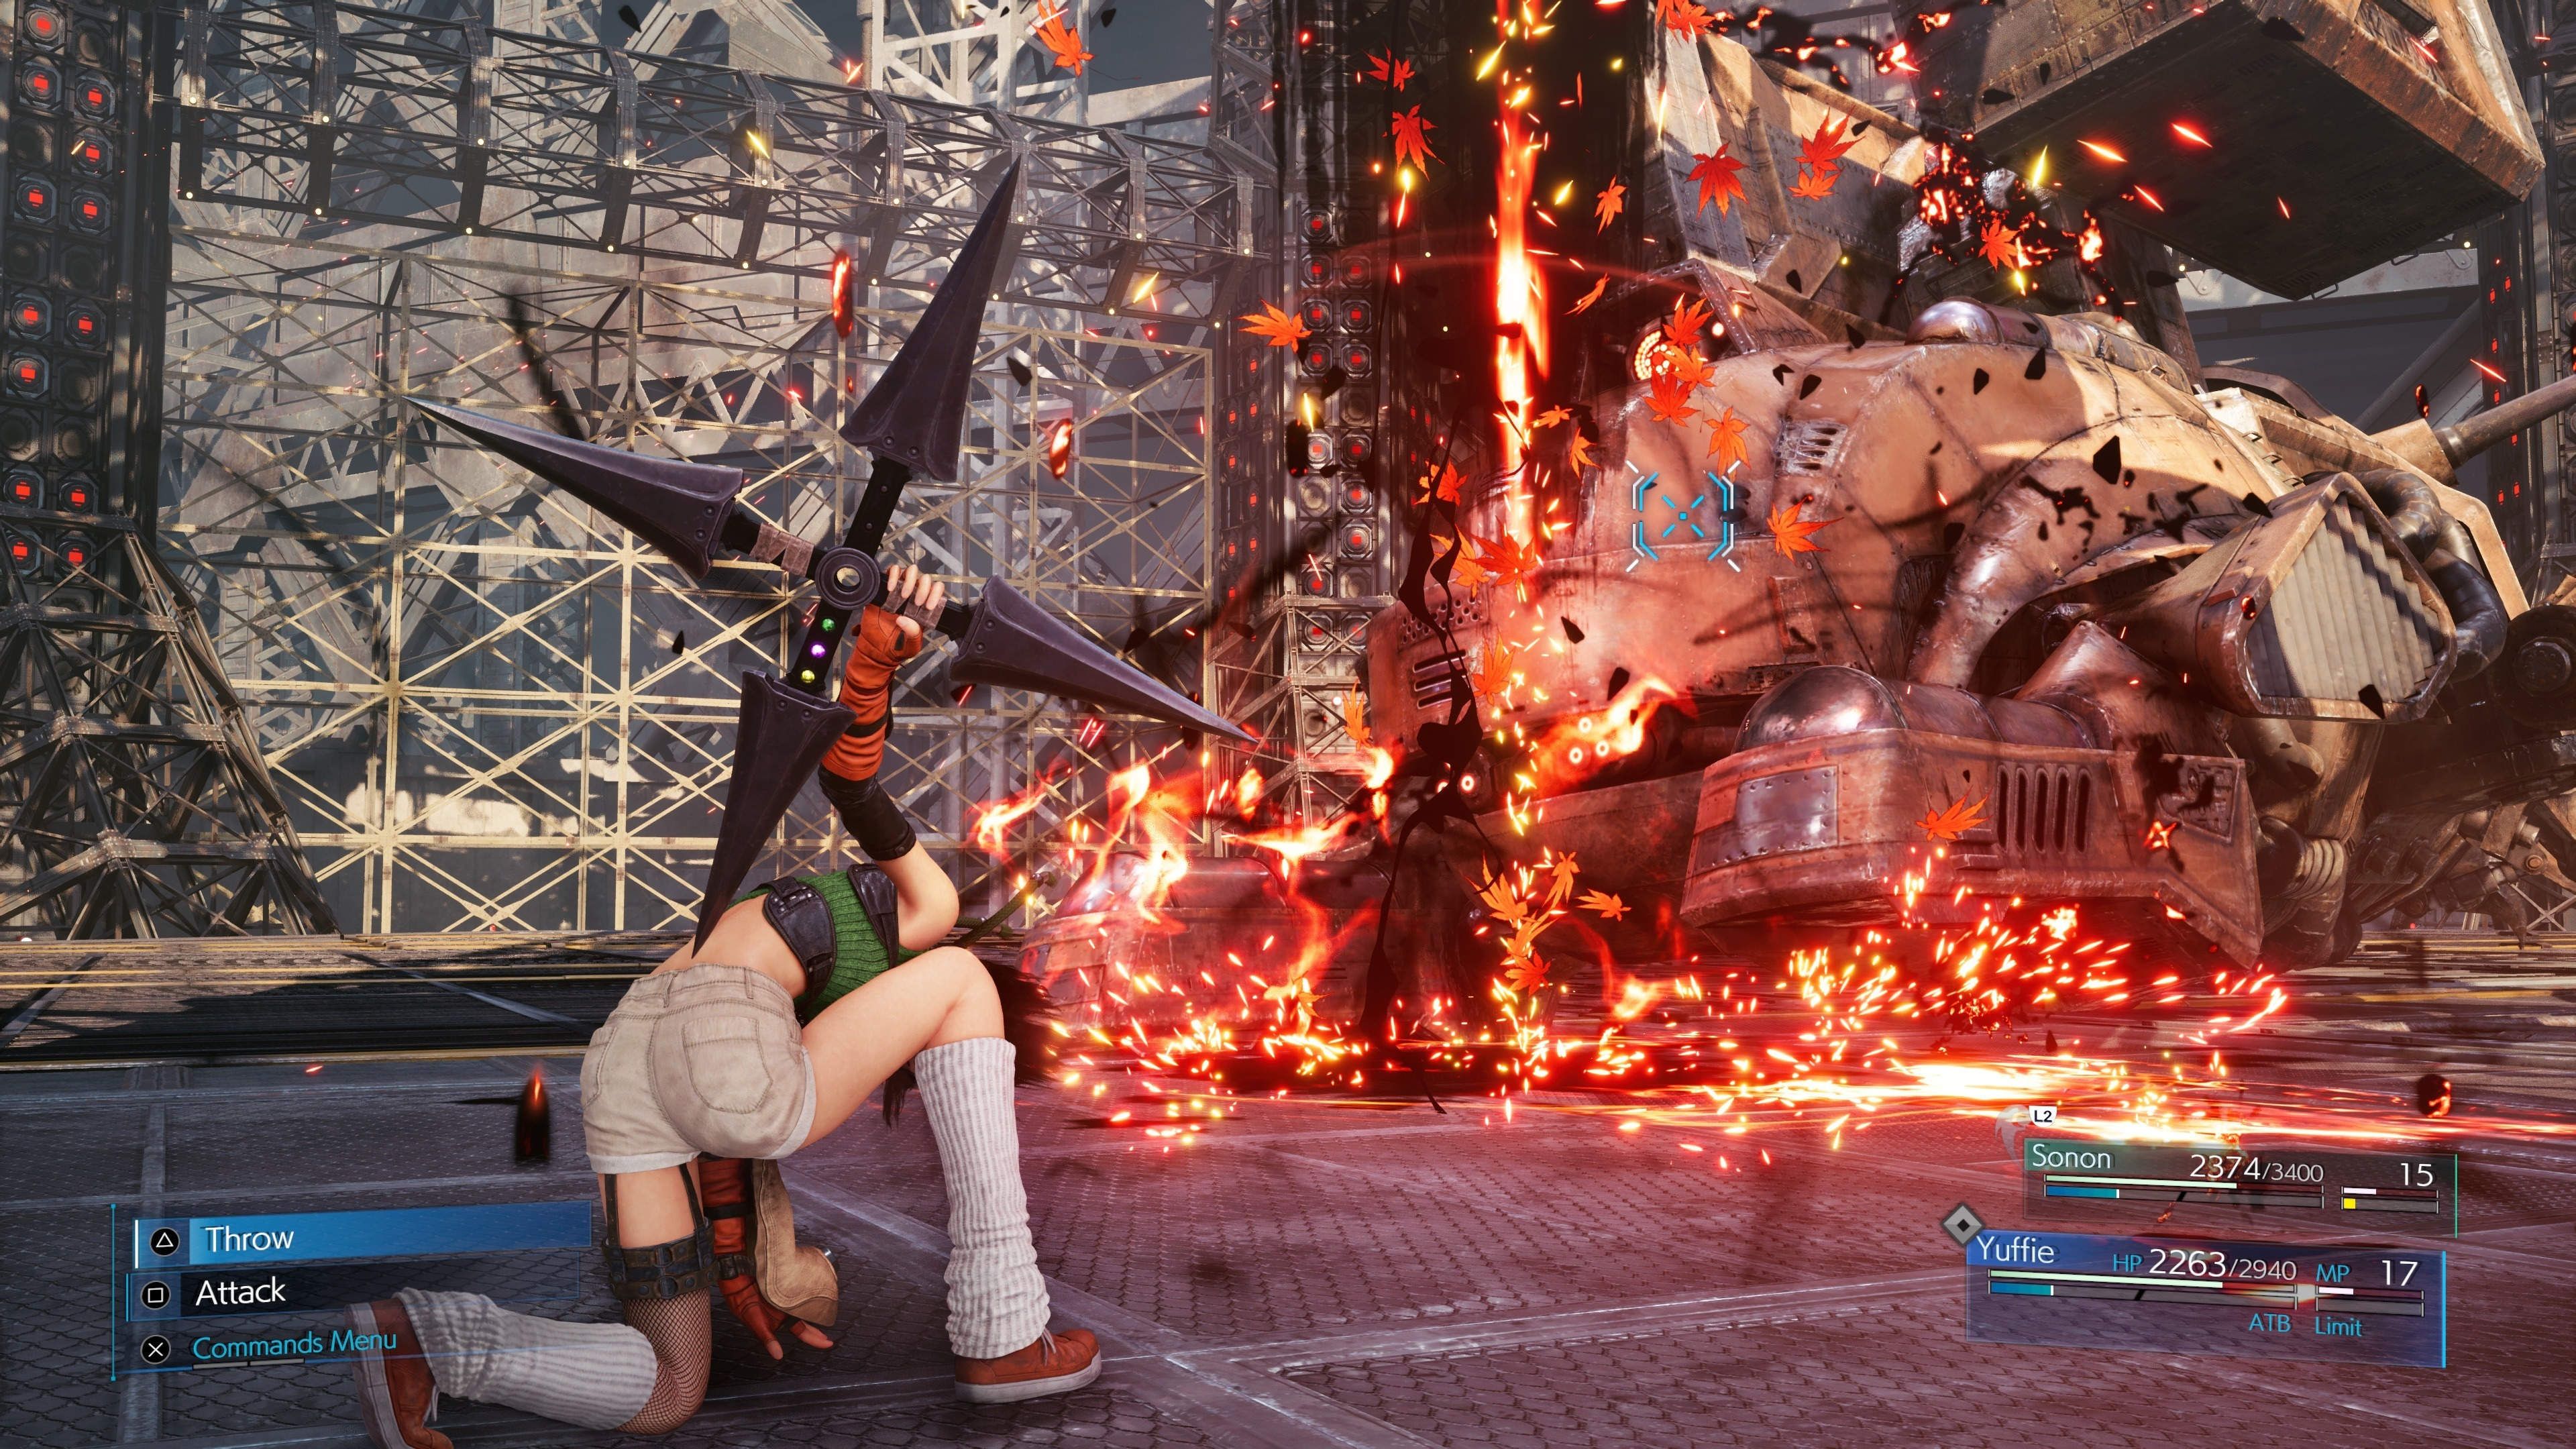 Final Fantasy VII Remake Intergrade PlayStation 5 - Screenshots Bilder